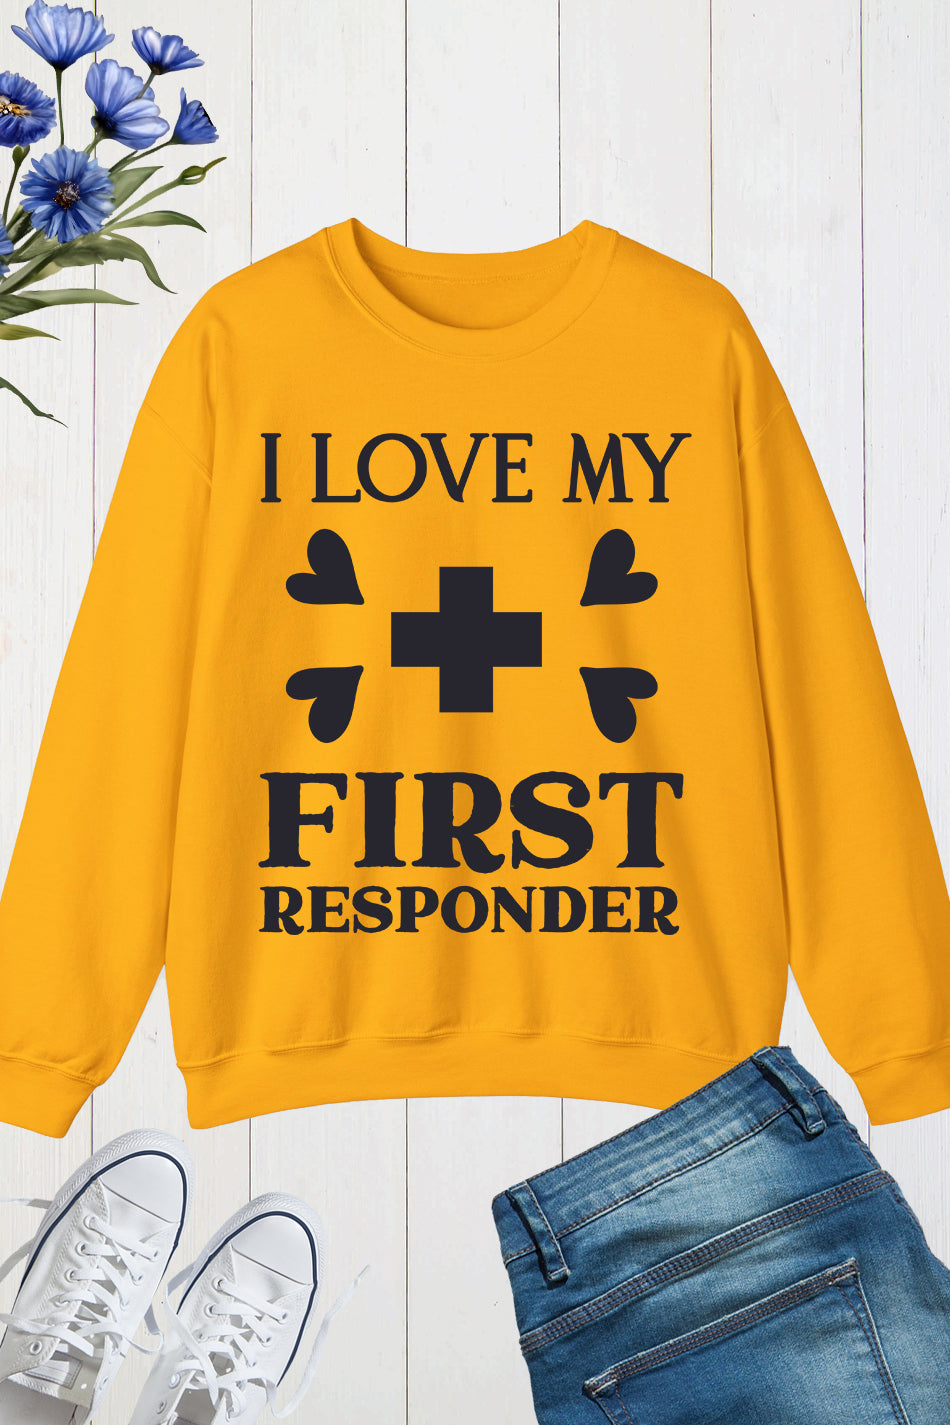 I Love My First Responder Sweatshirt  911 Fantasy SweatshirtI Love My First Responder Sweatshirt  911 Fantasy Sweatshirt